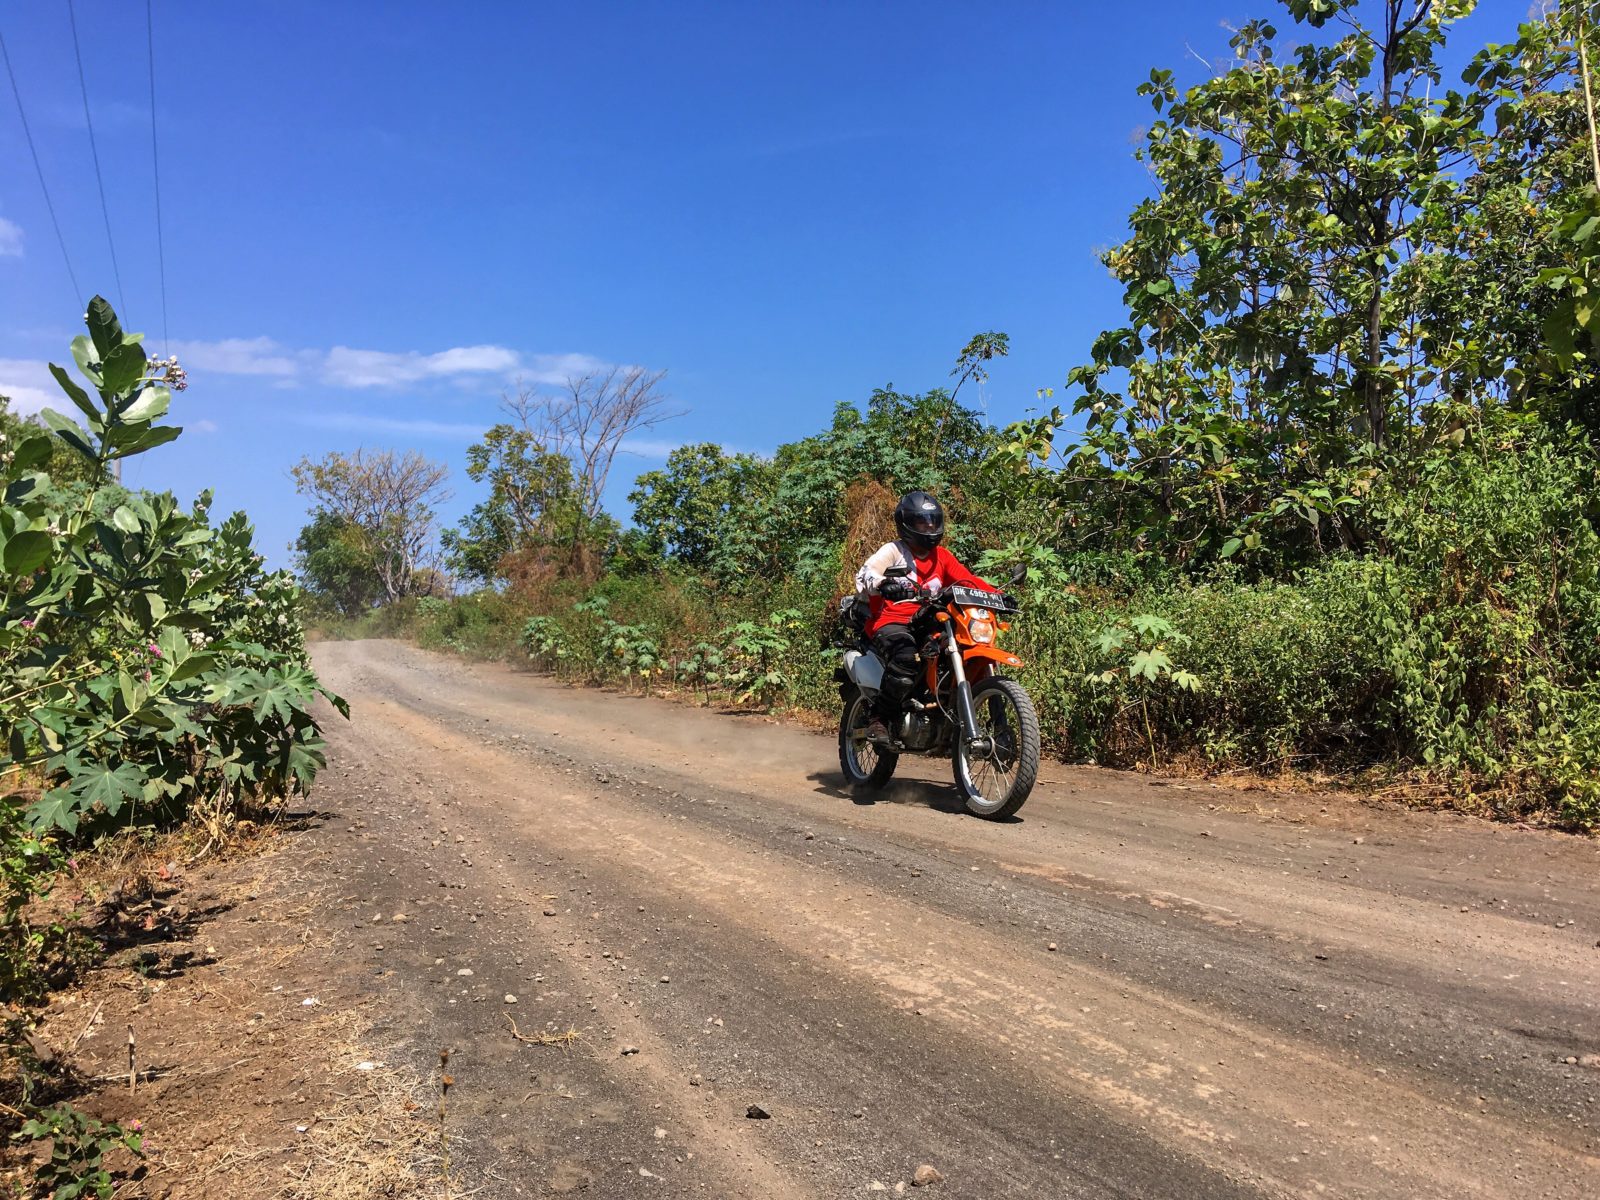 Visit Tambora Village and Volcano on an Enduro Dirt Bike tour